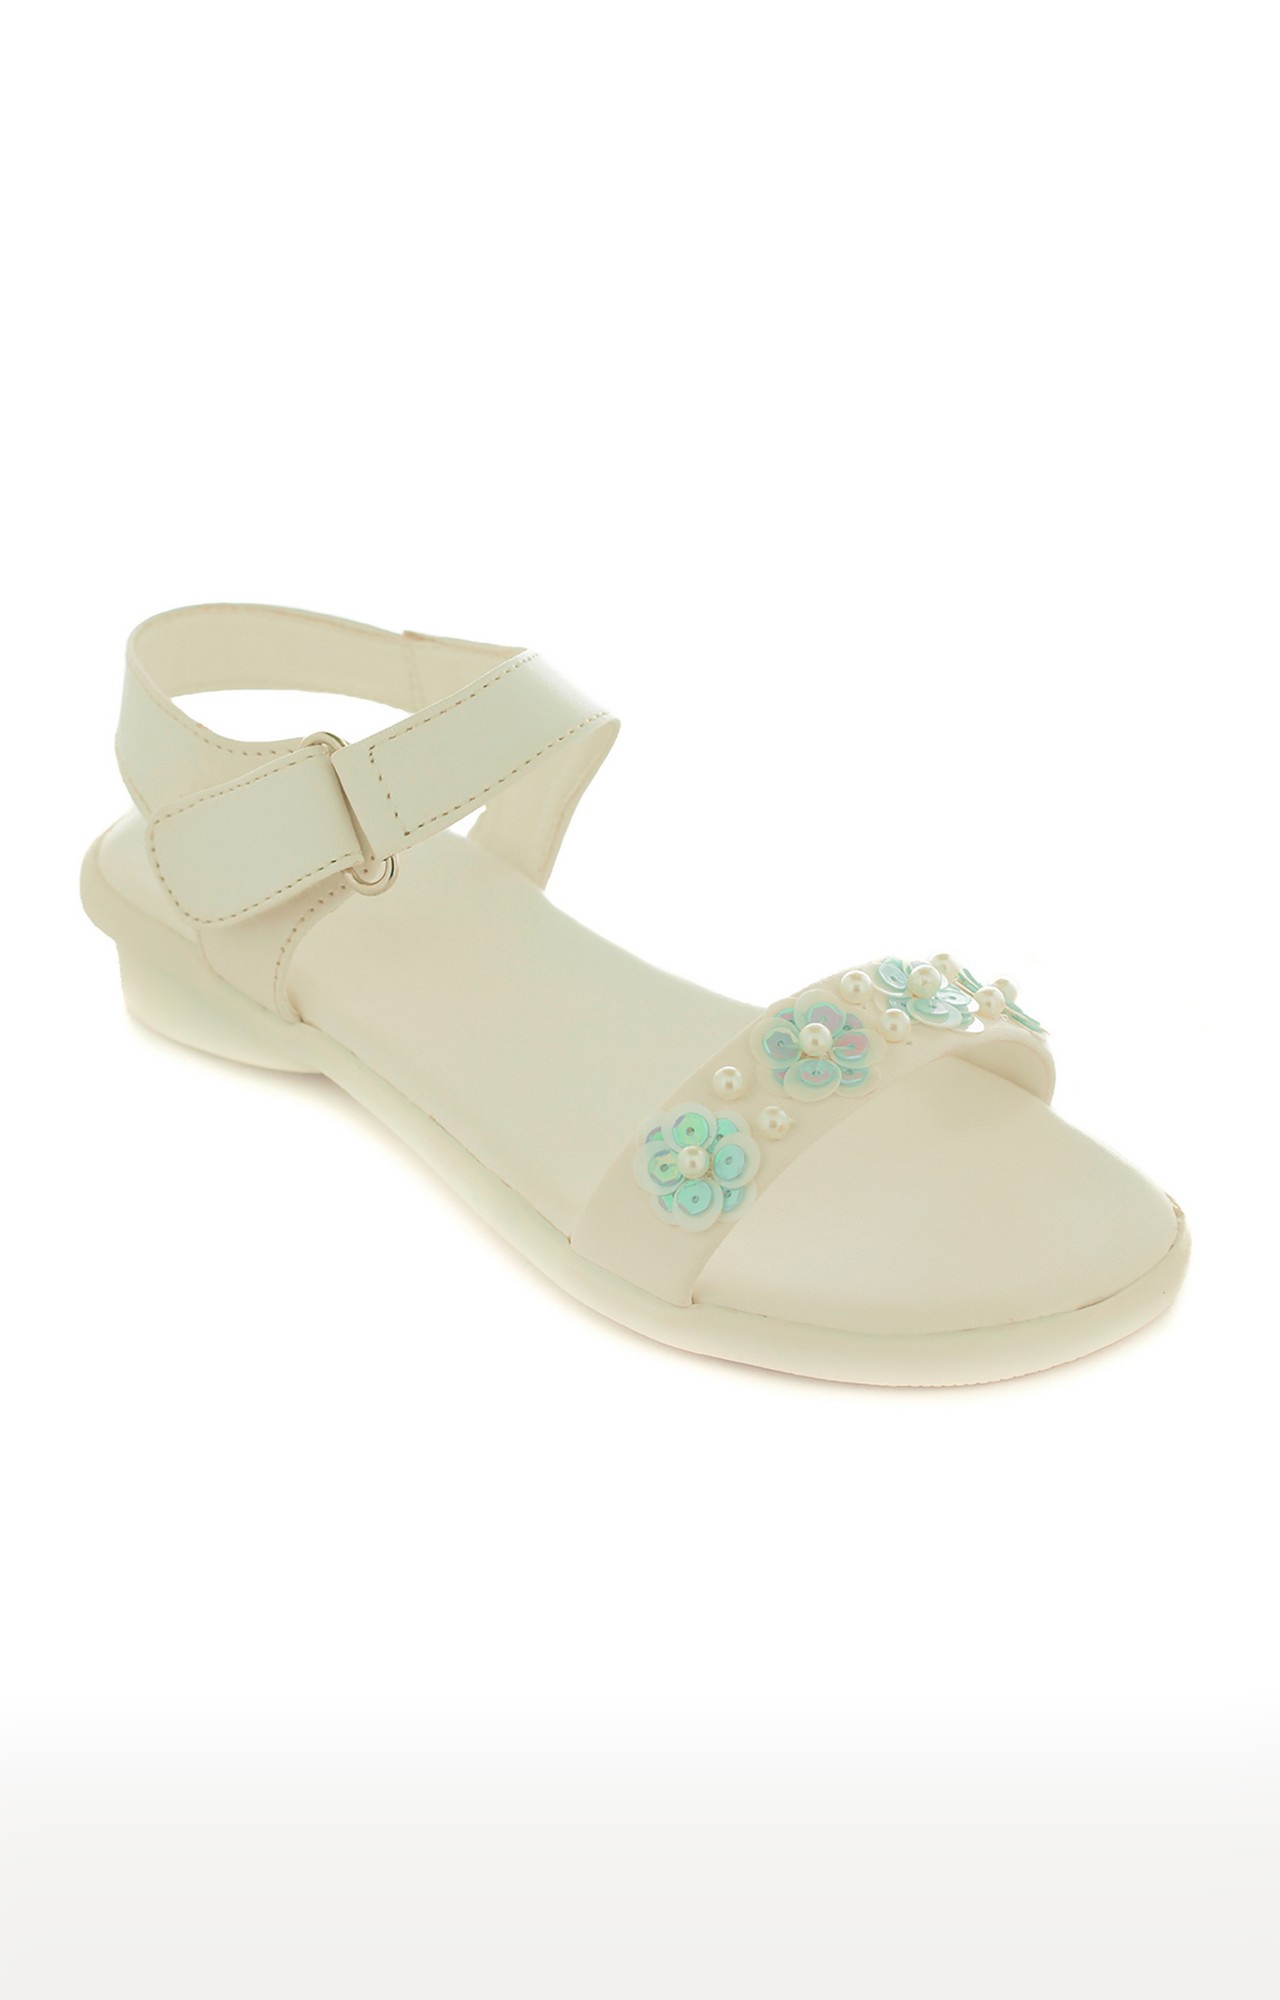 Trends & Trades | Girls White Velcro Sandals 0